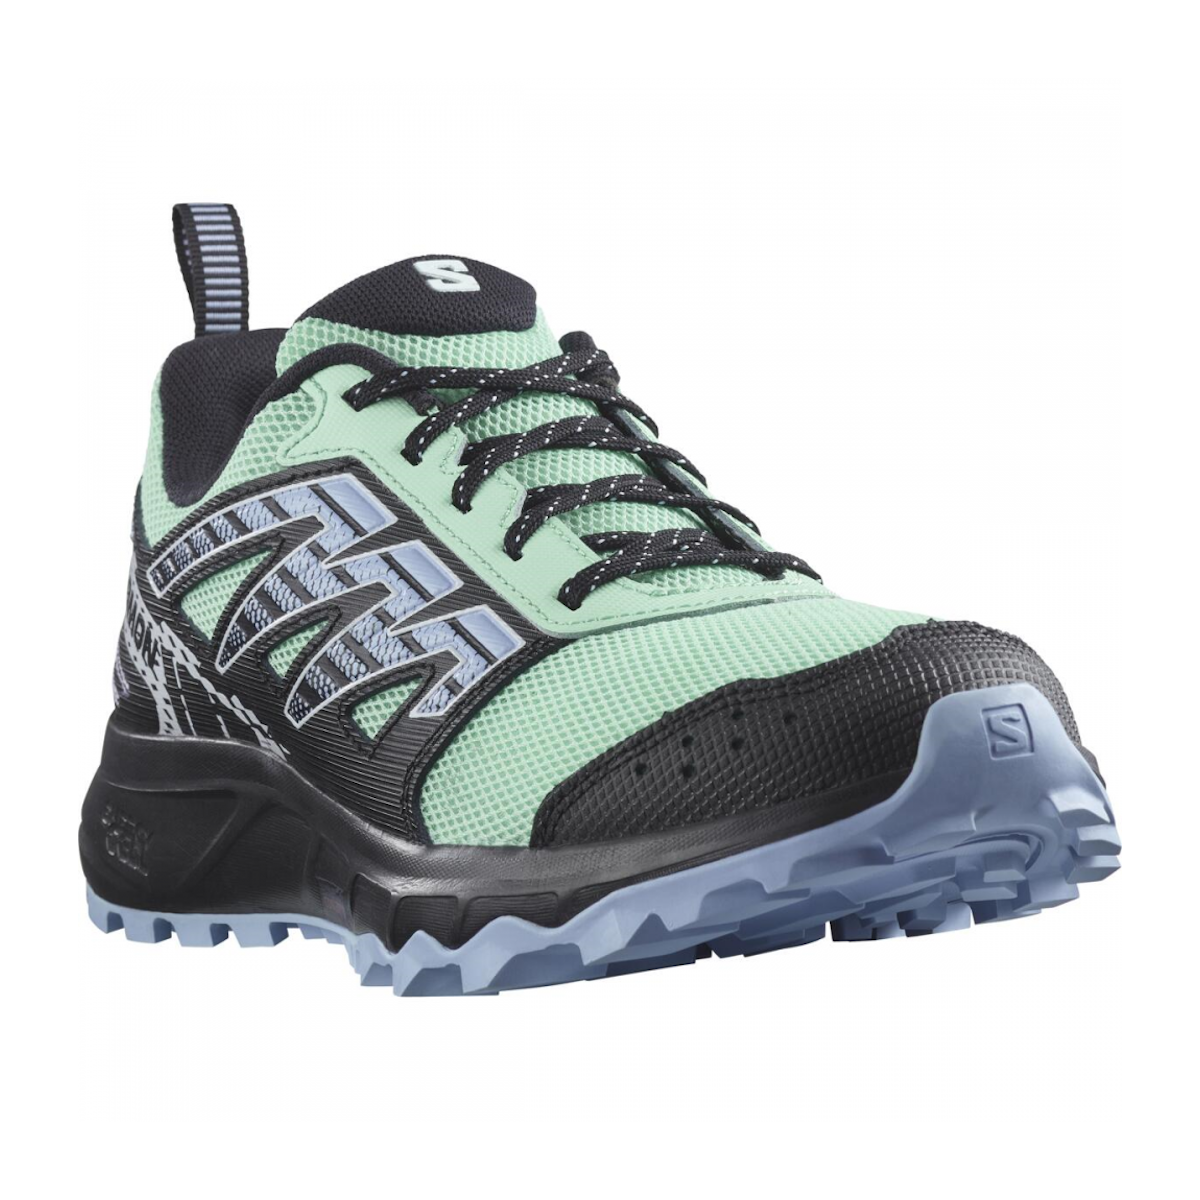 SALOMON WANDER W trail running shoes - black/green/violet